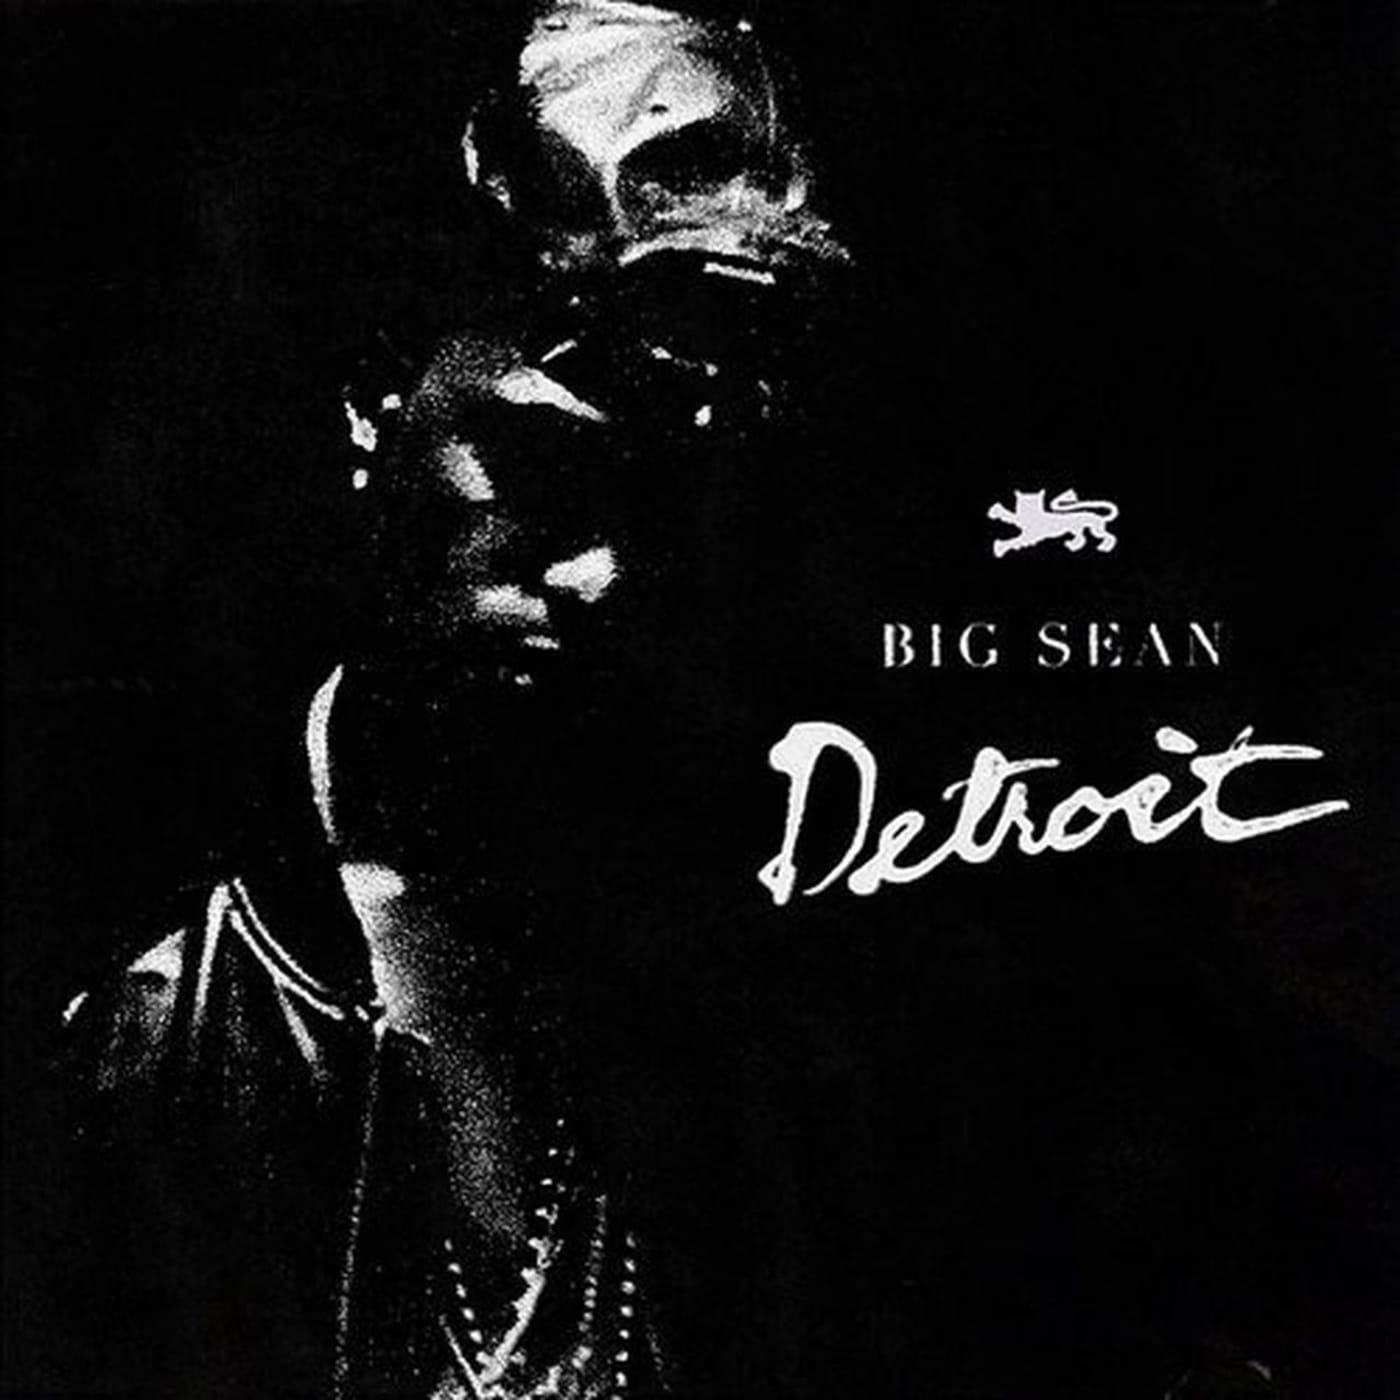 Big Sean Detroit mixtape cover art via Def Jam Recordings